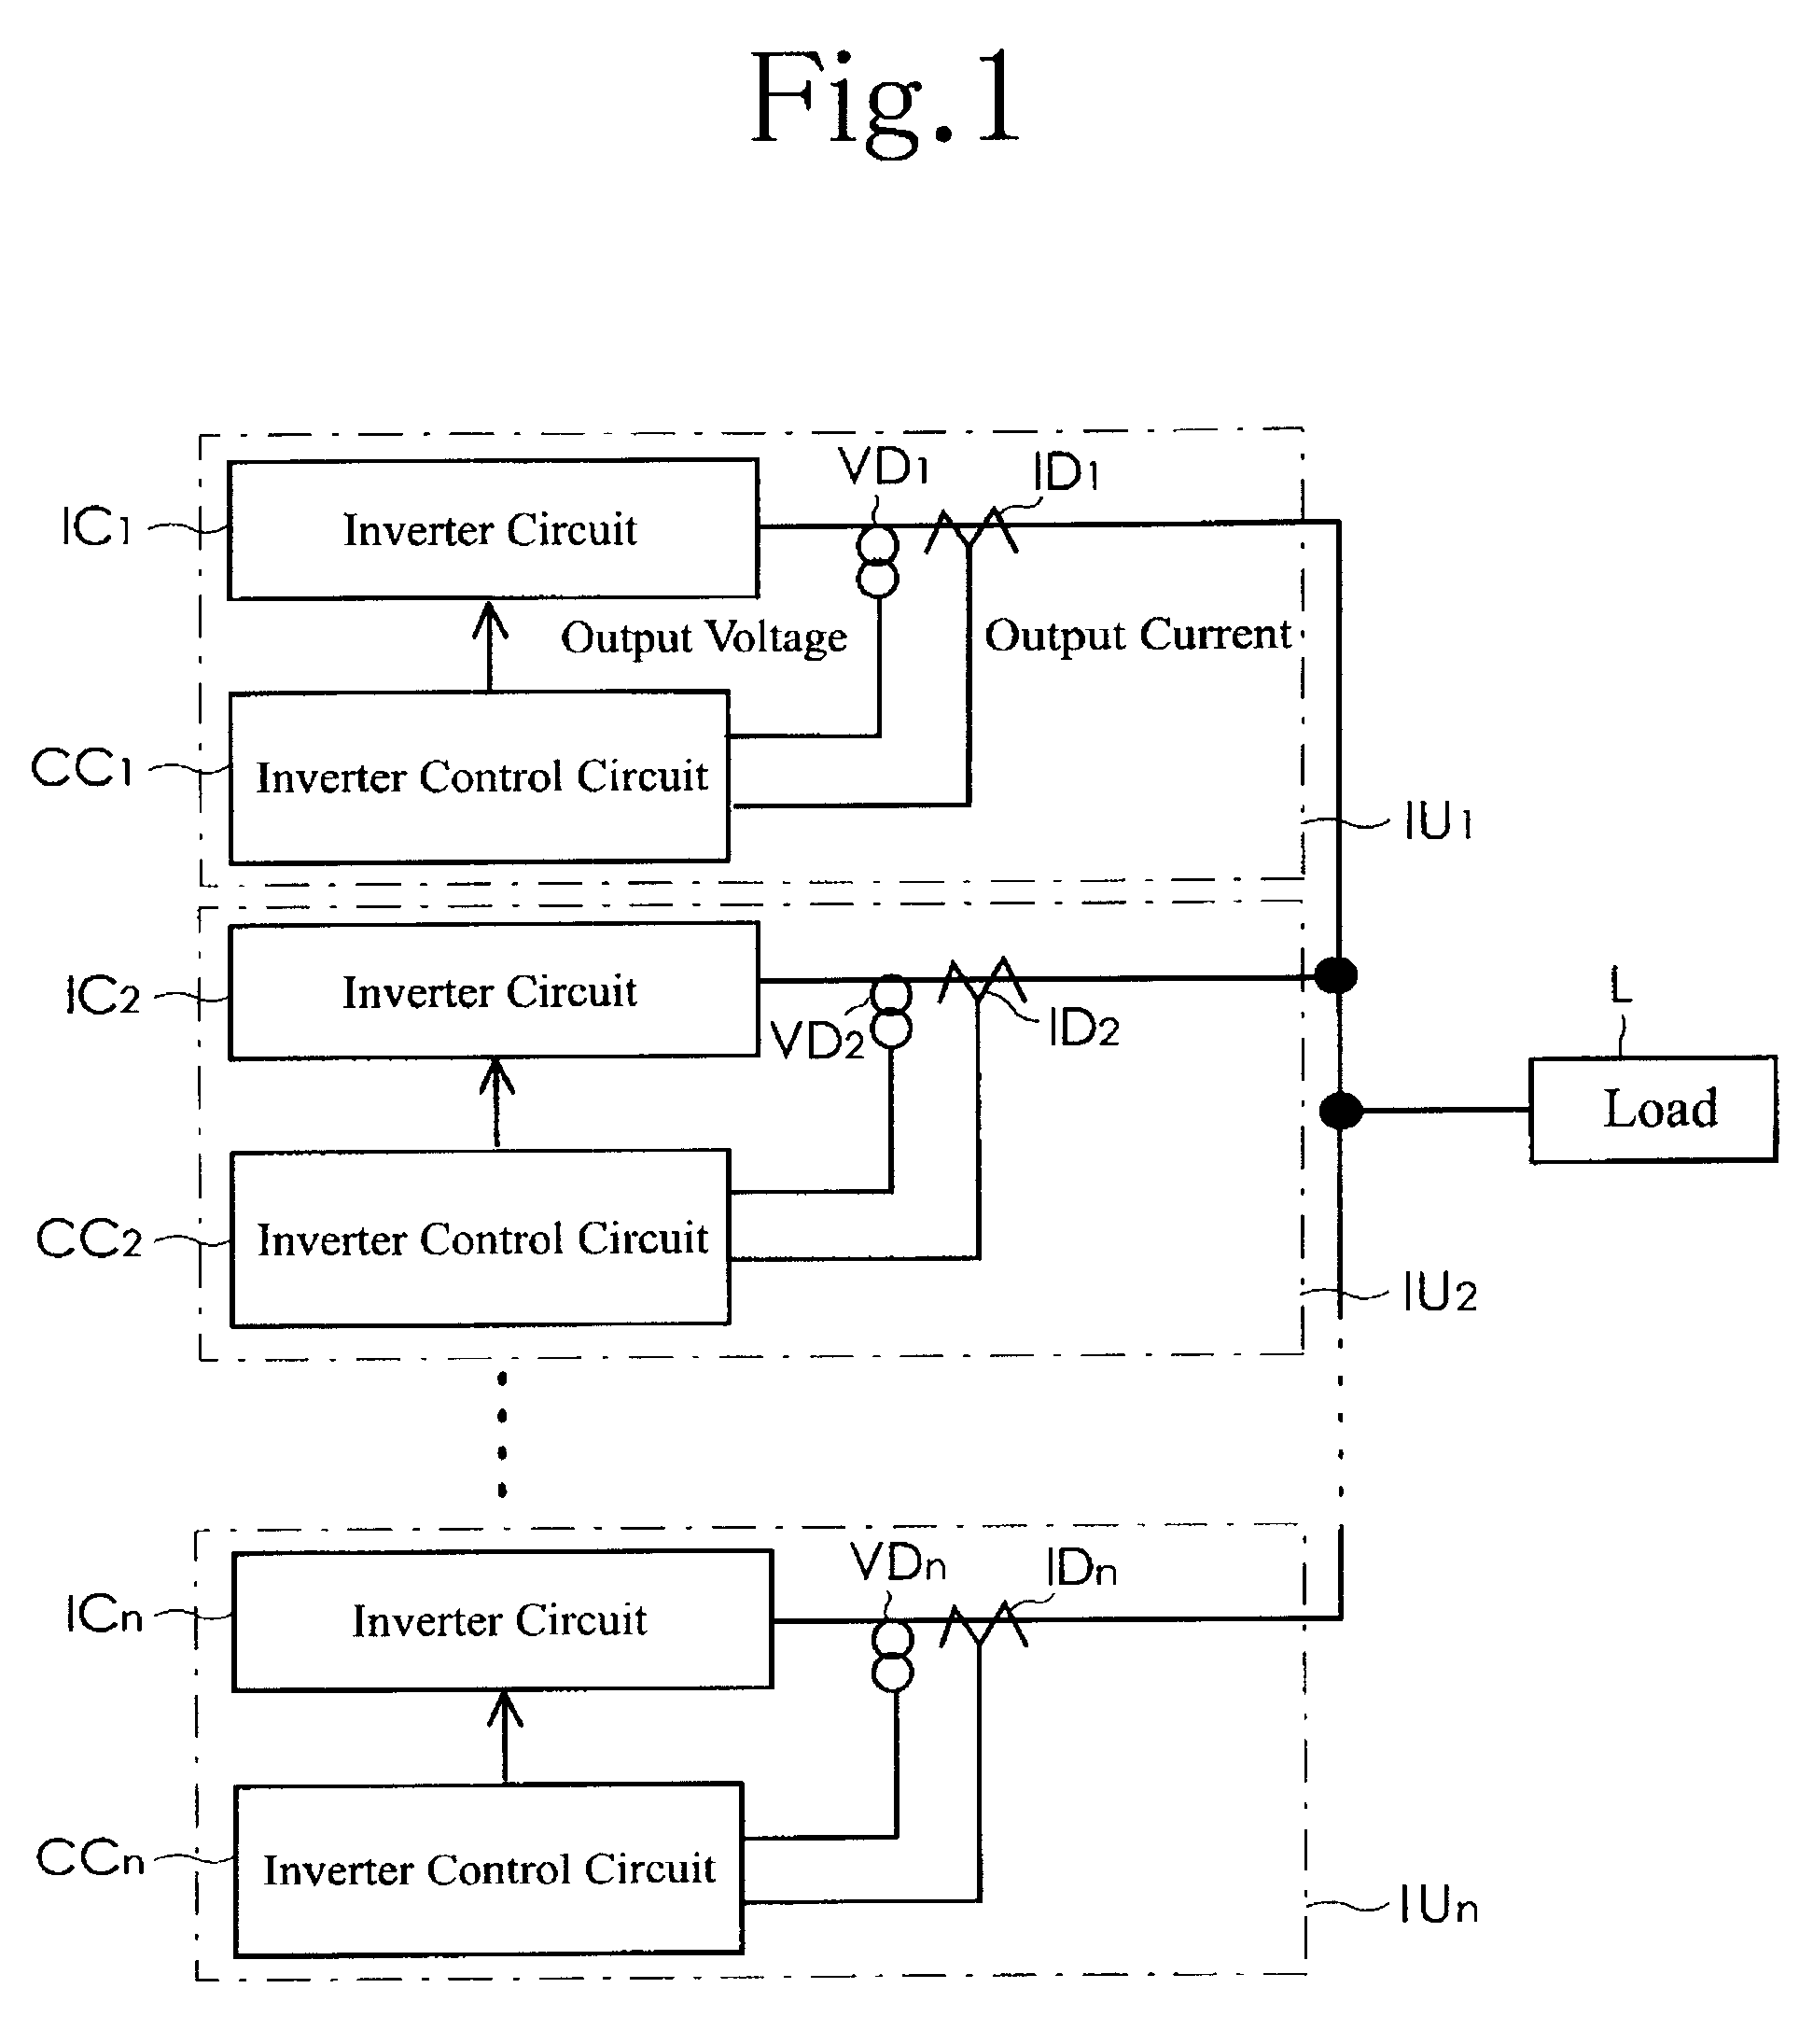 Parallel inverter system